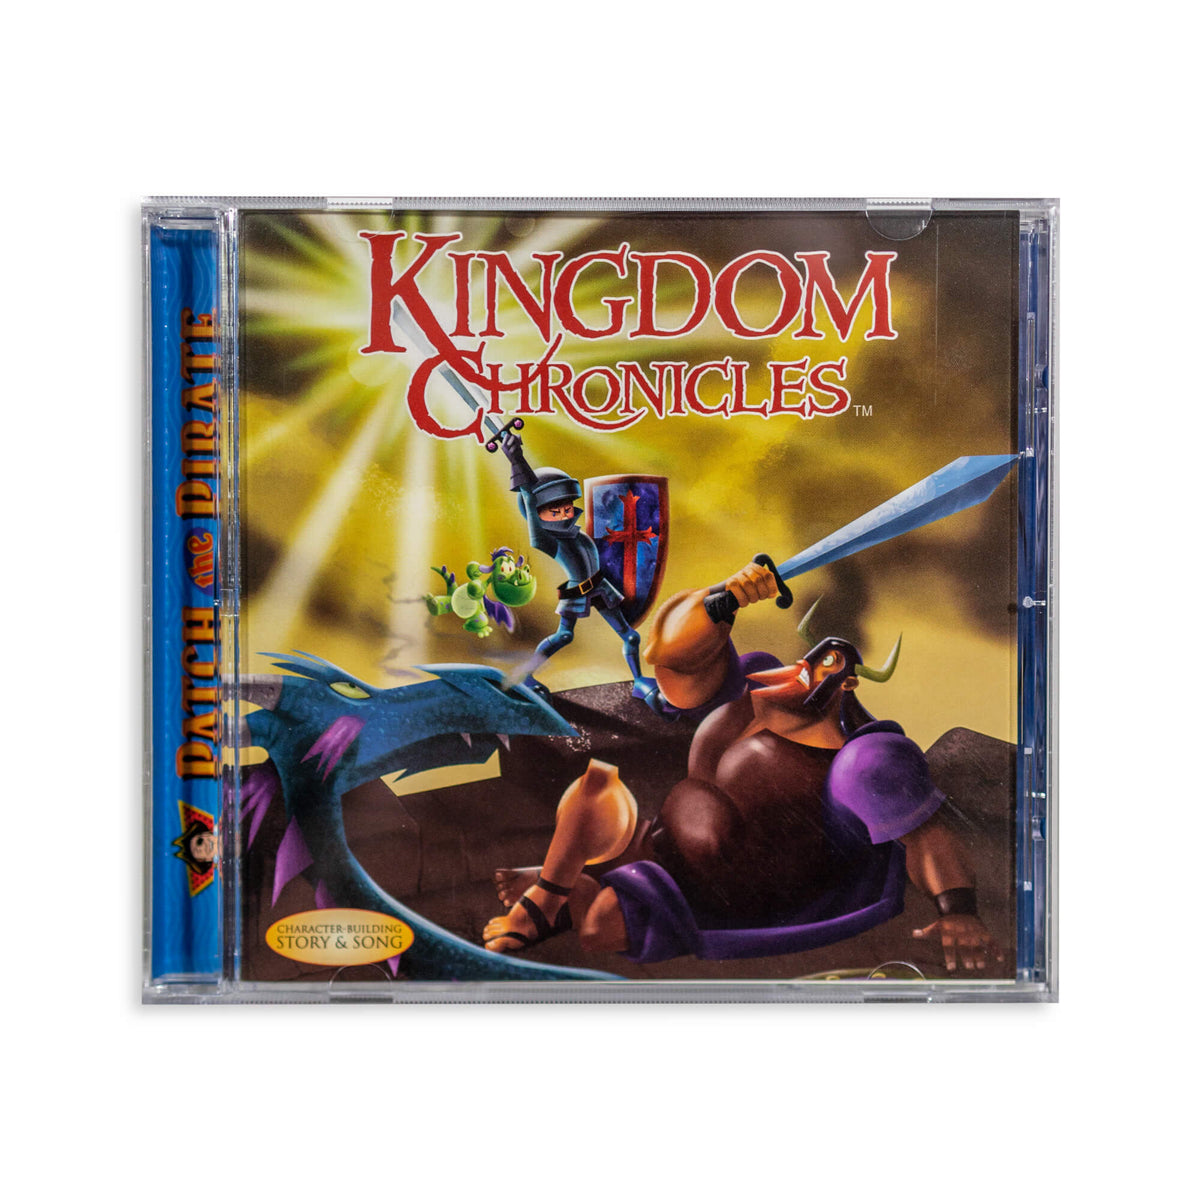 Kingdom Chronicles Musical Drama CD